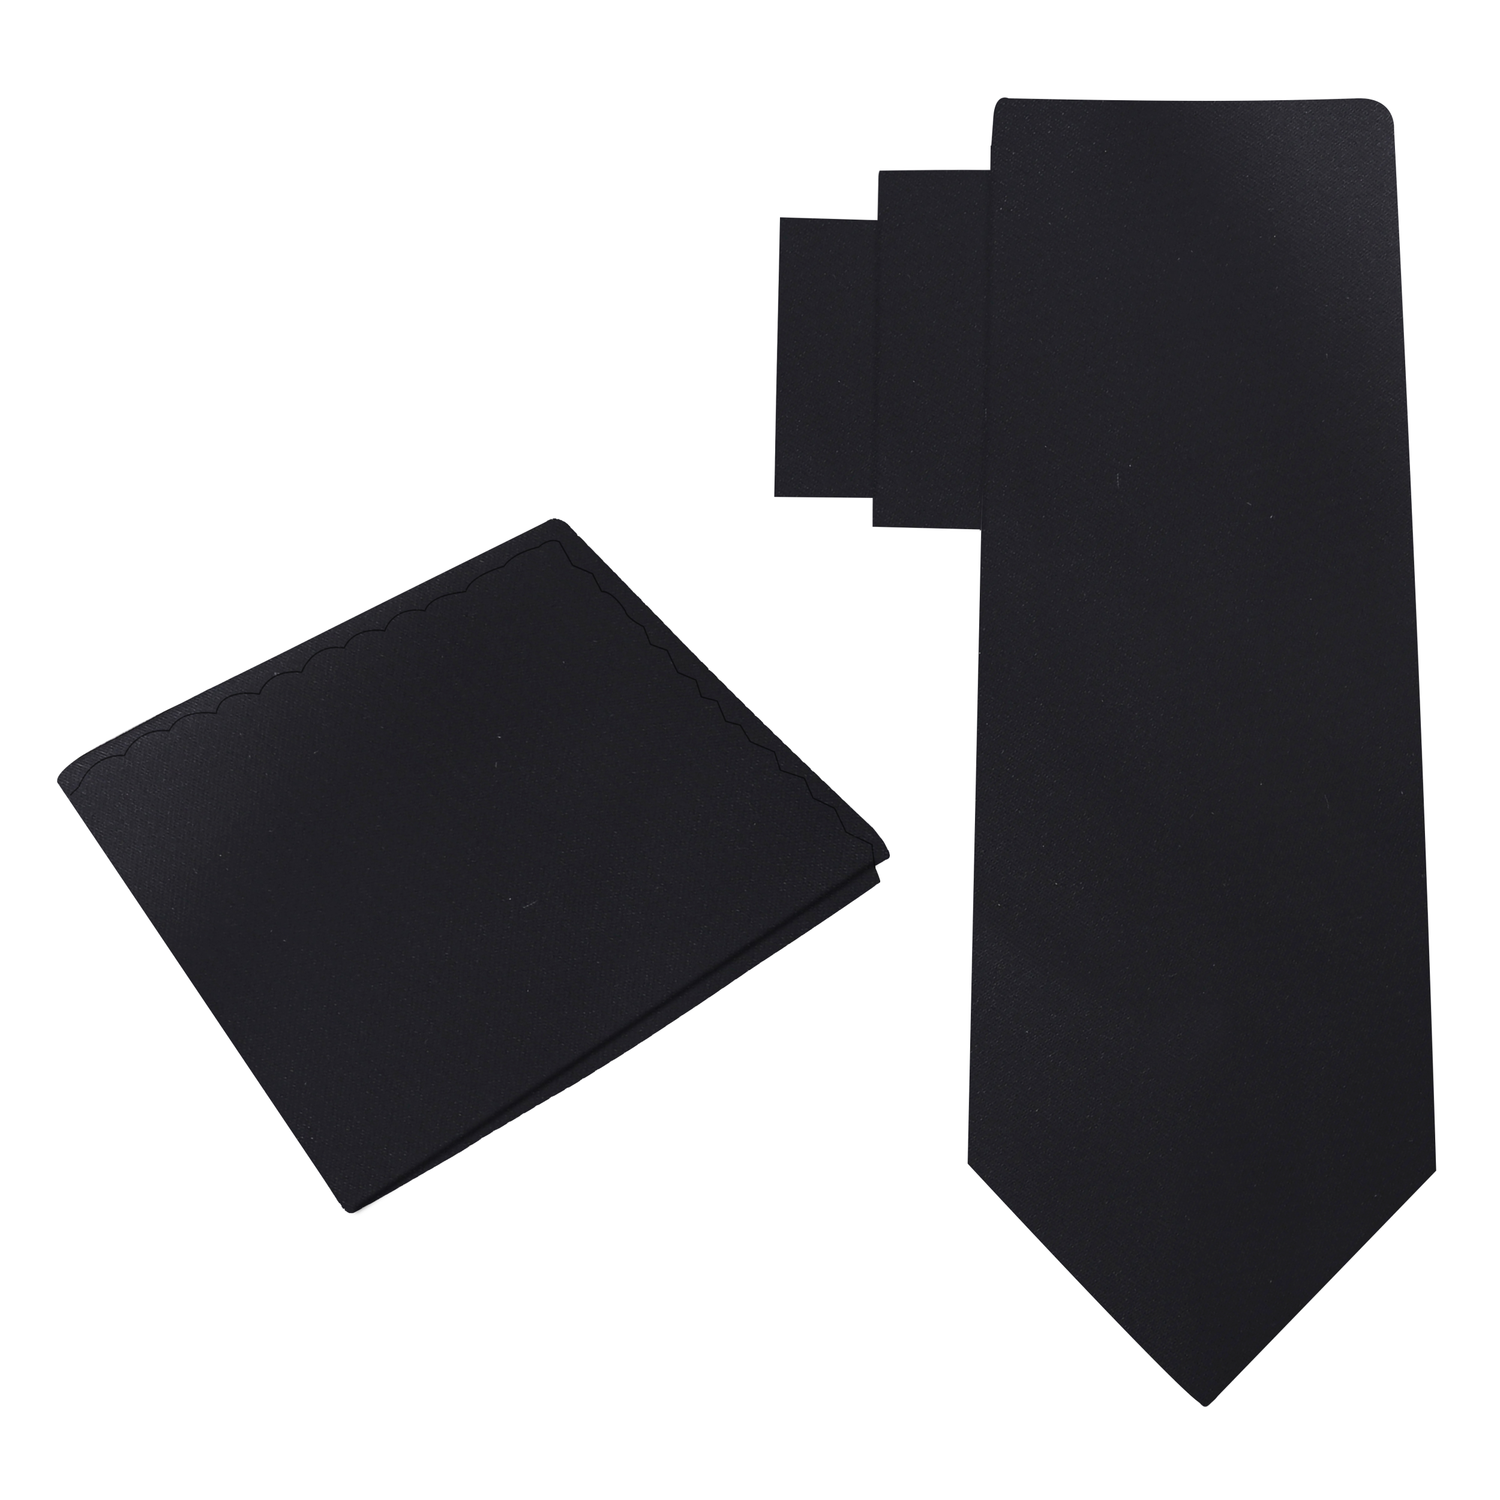 Alt View: Black Necktie with Solid Black Pocket Square on Black Suit